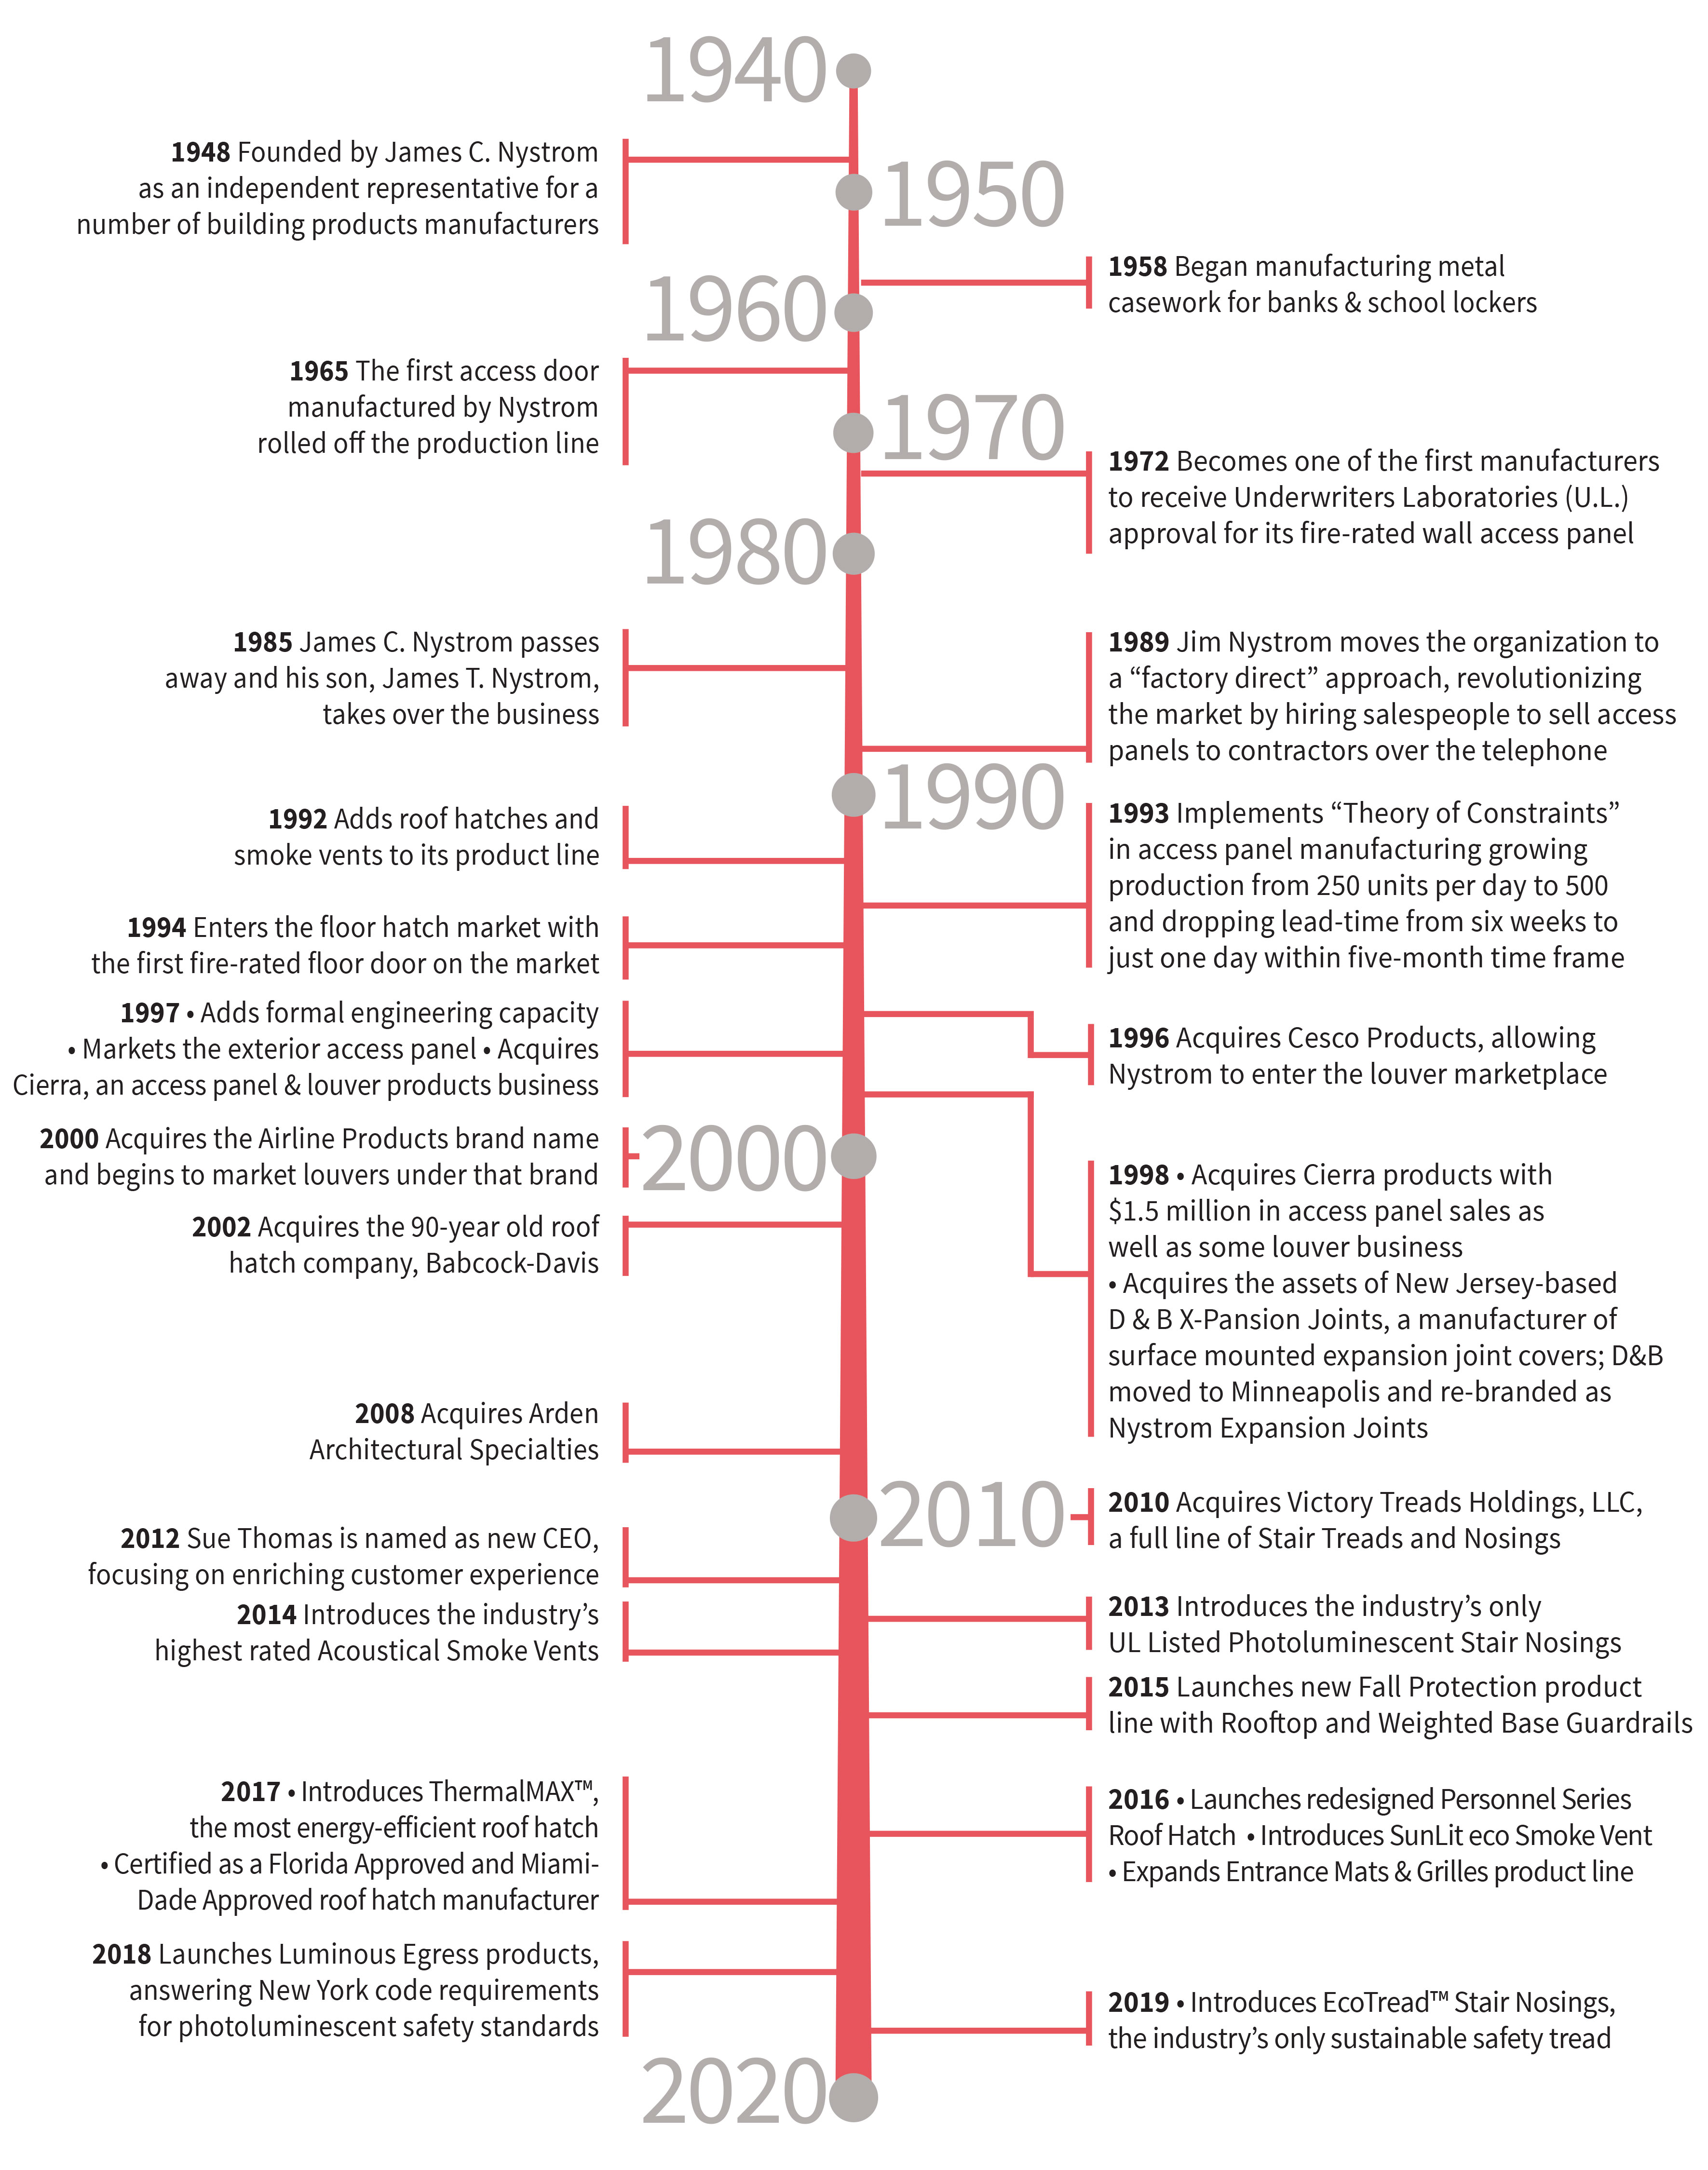 Nystrom History Timeline